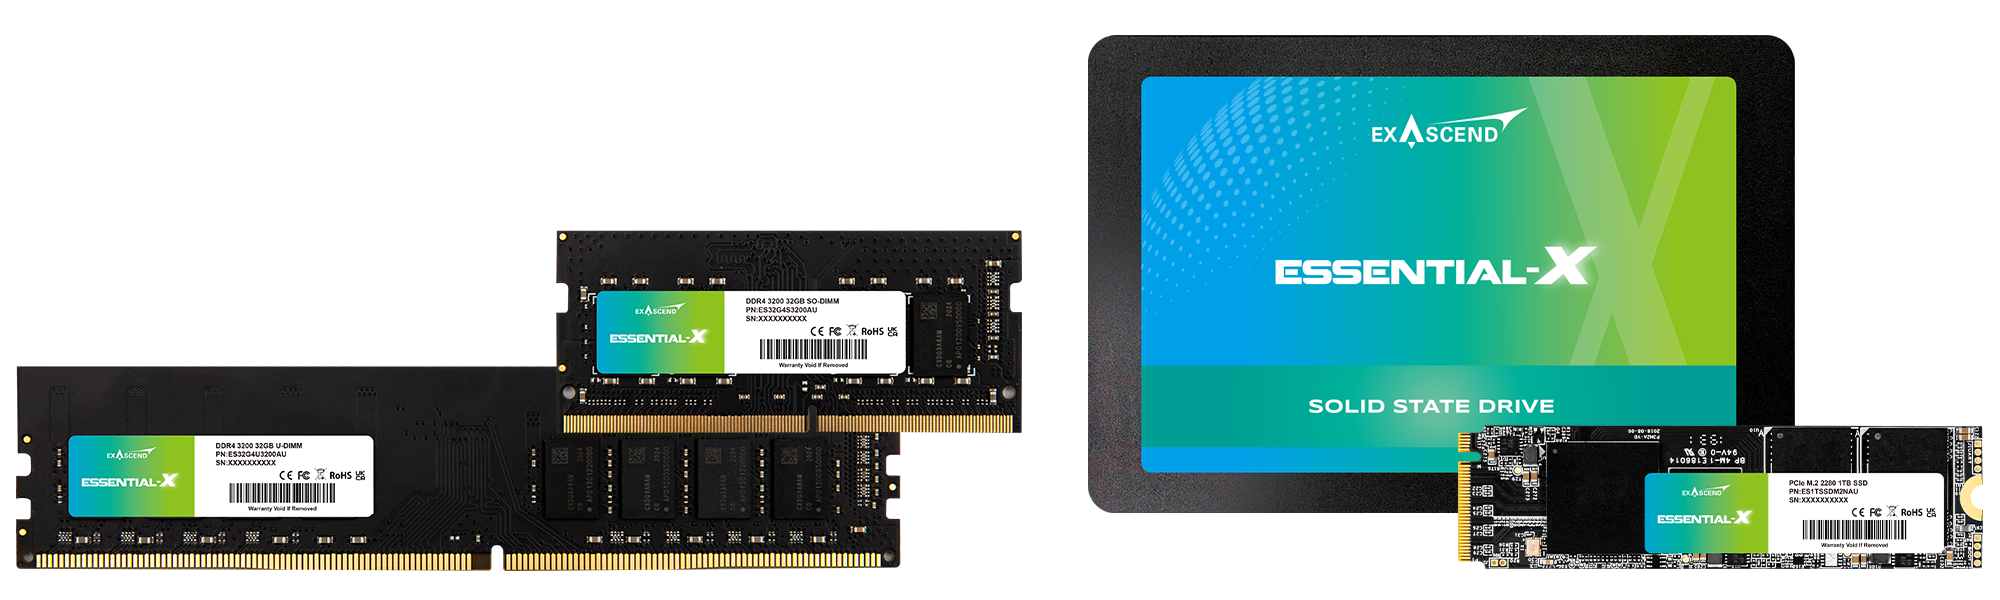 Essential-X: High-value PCIe SSD, SATA SSD & DDR4 RAM